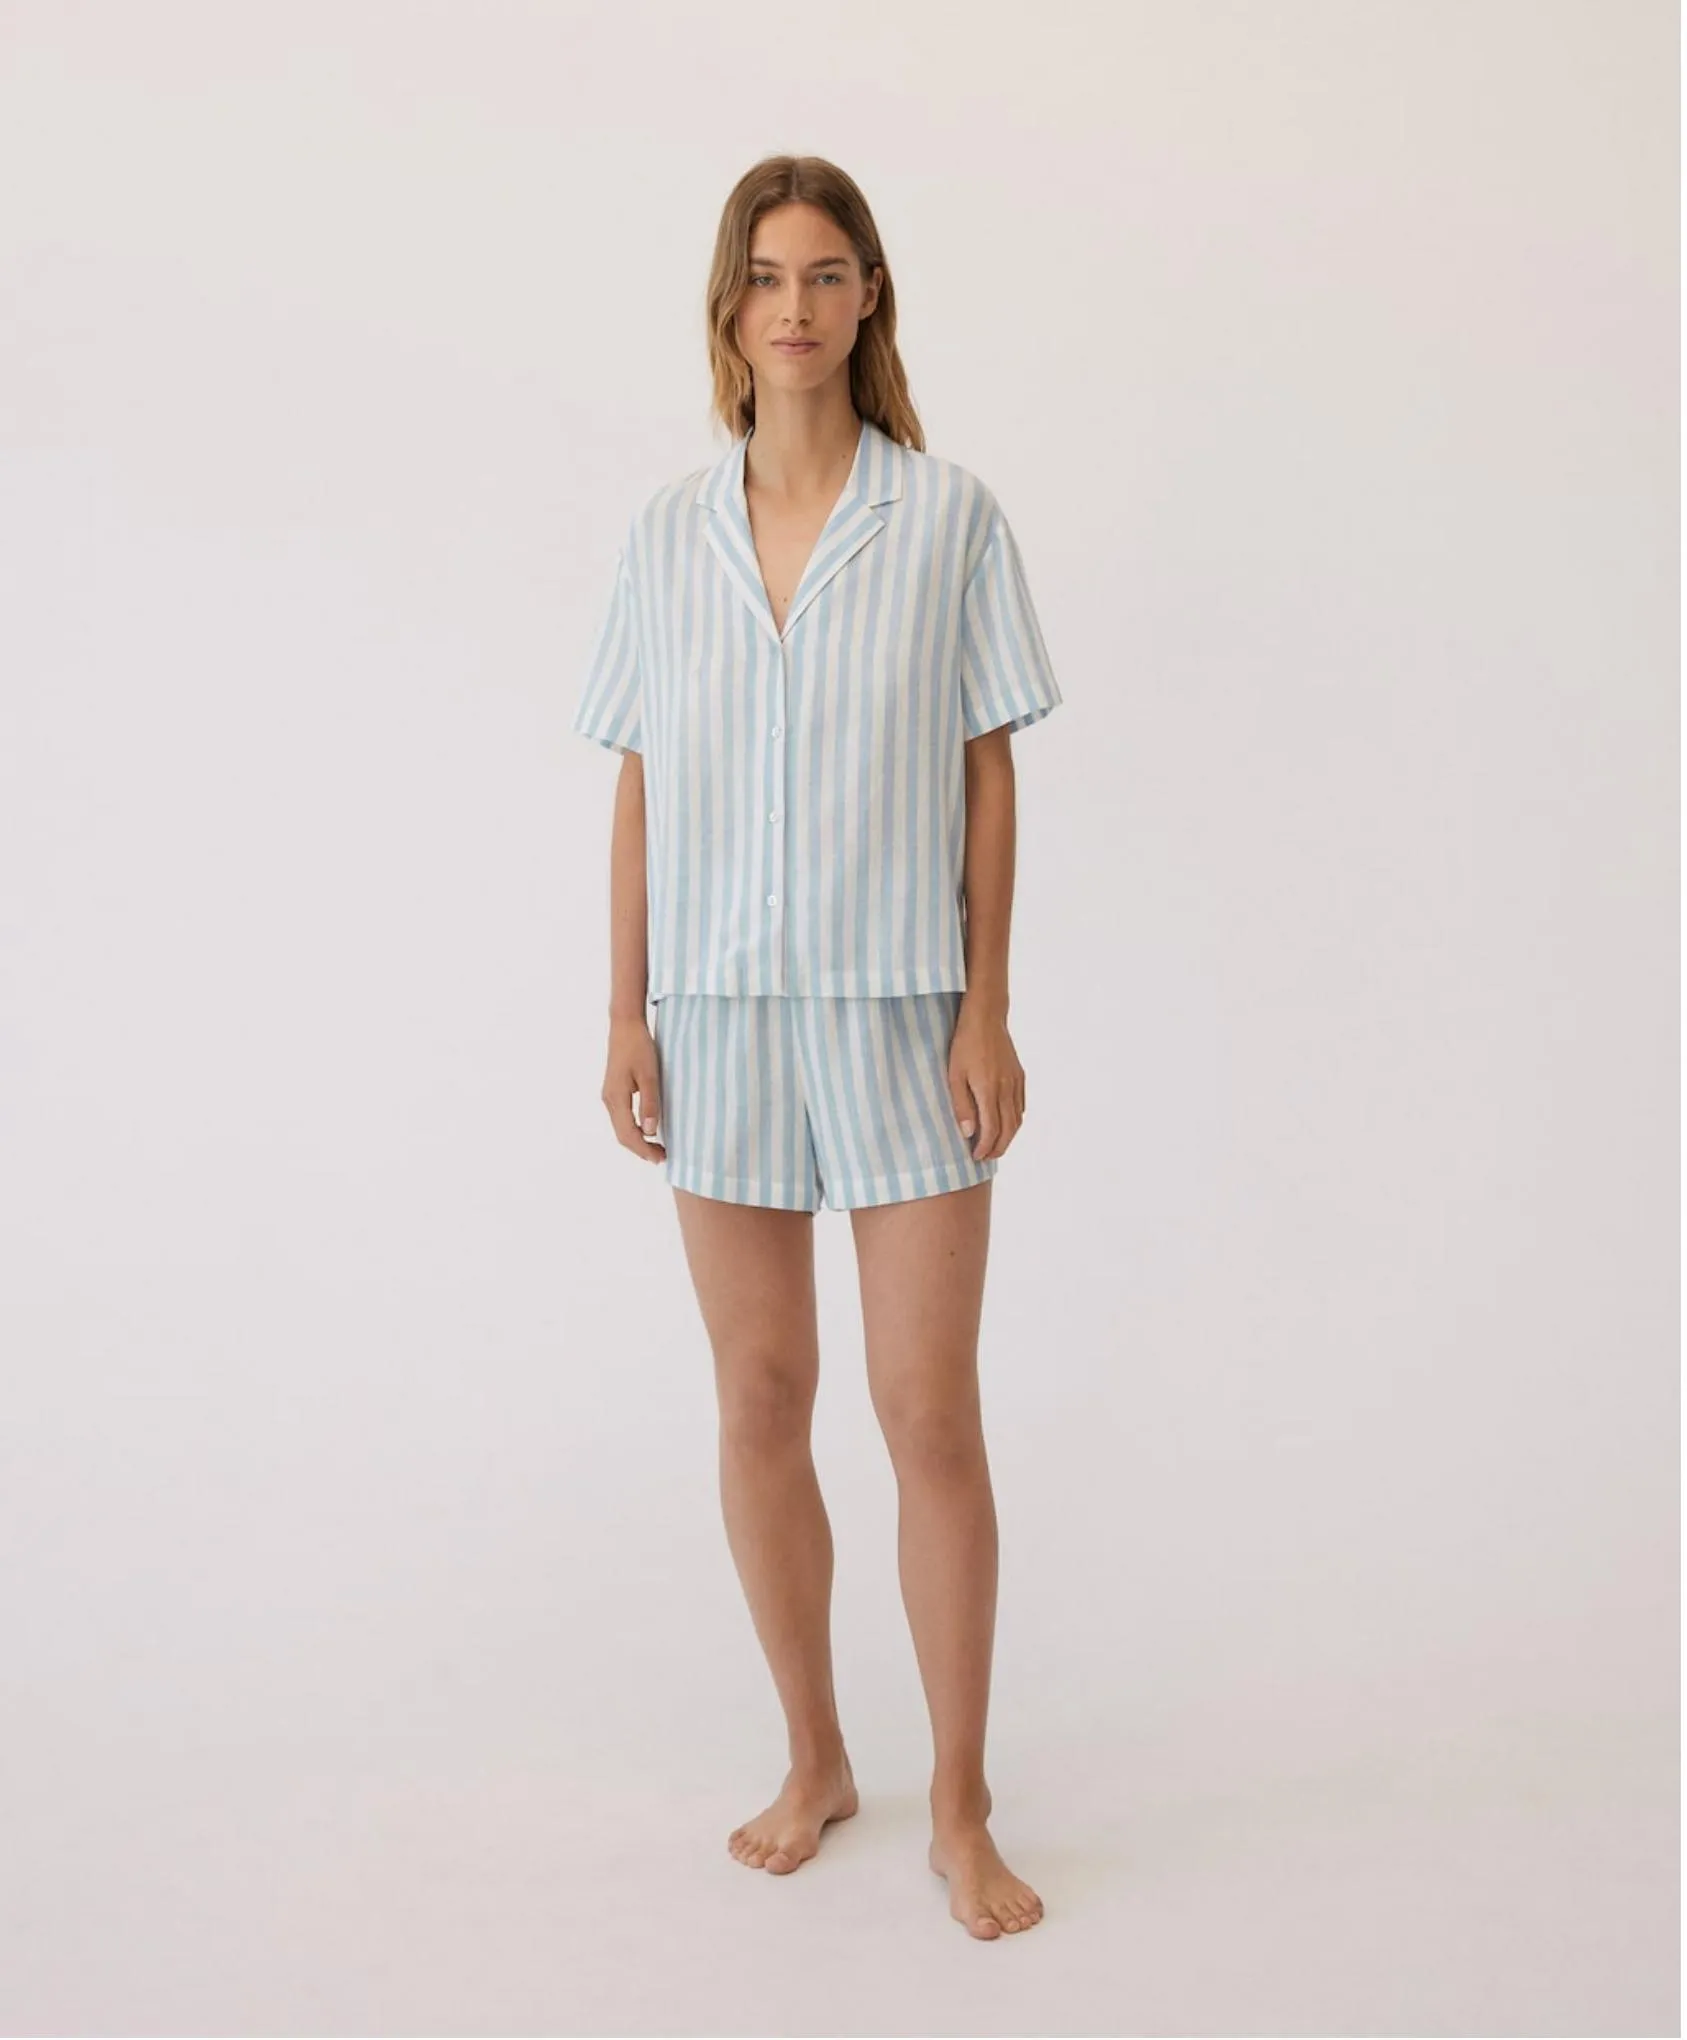 Catalogue Pyjamas et Homewear, page 00018